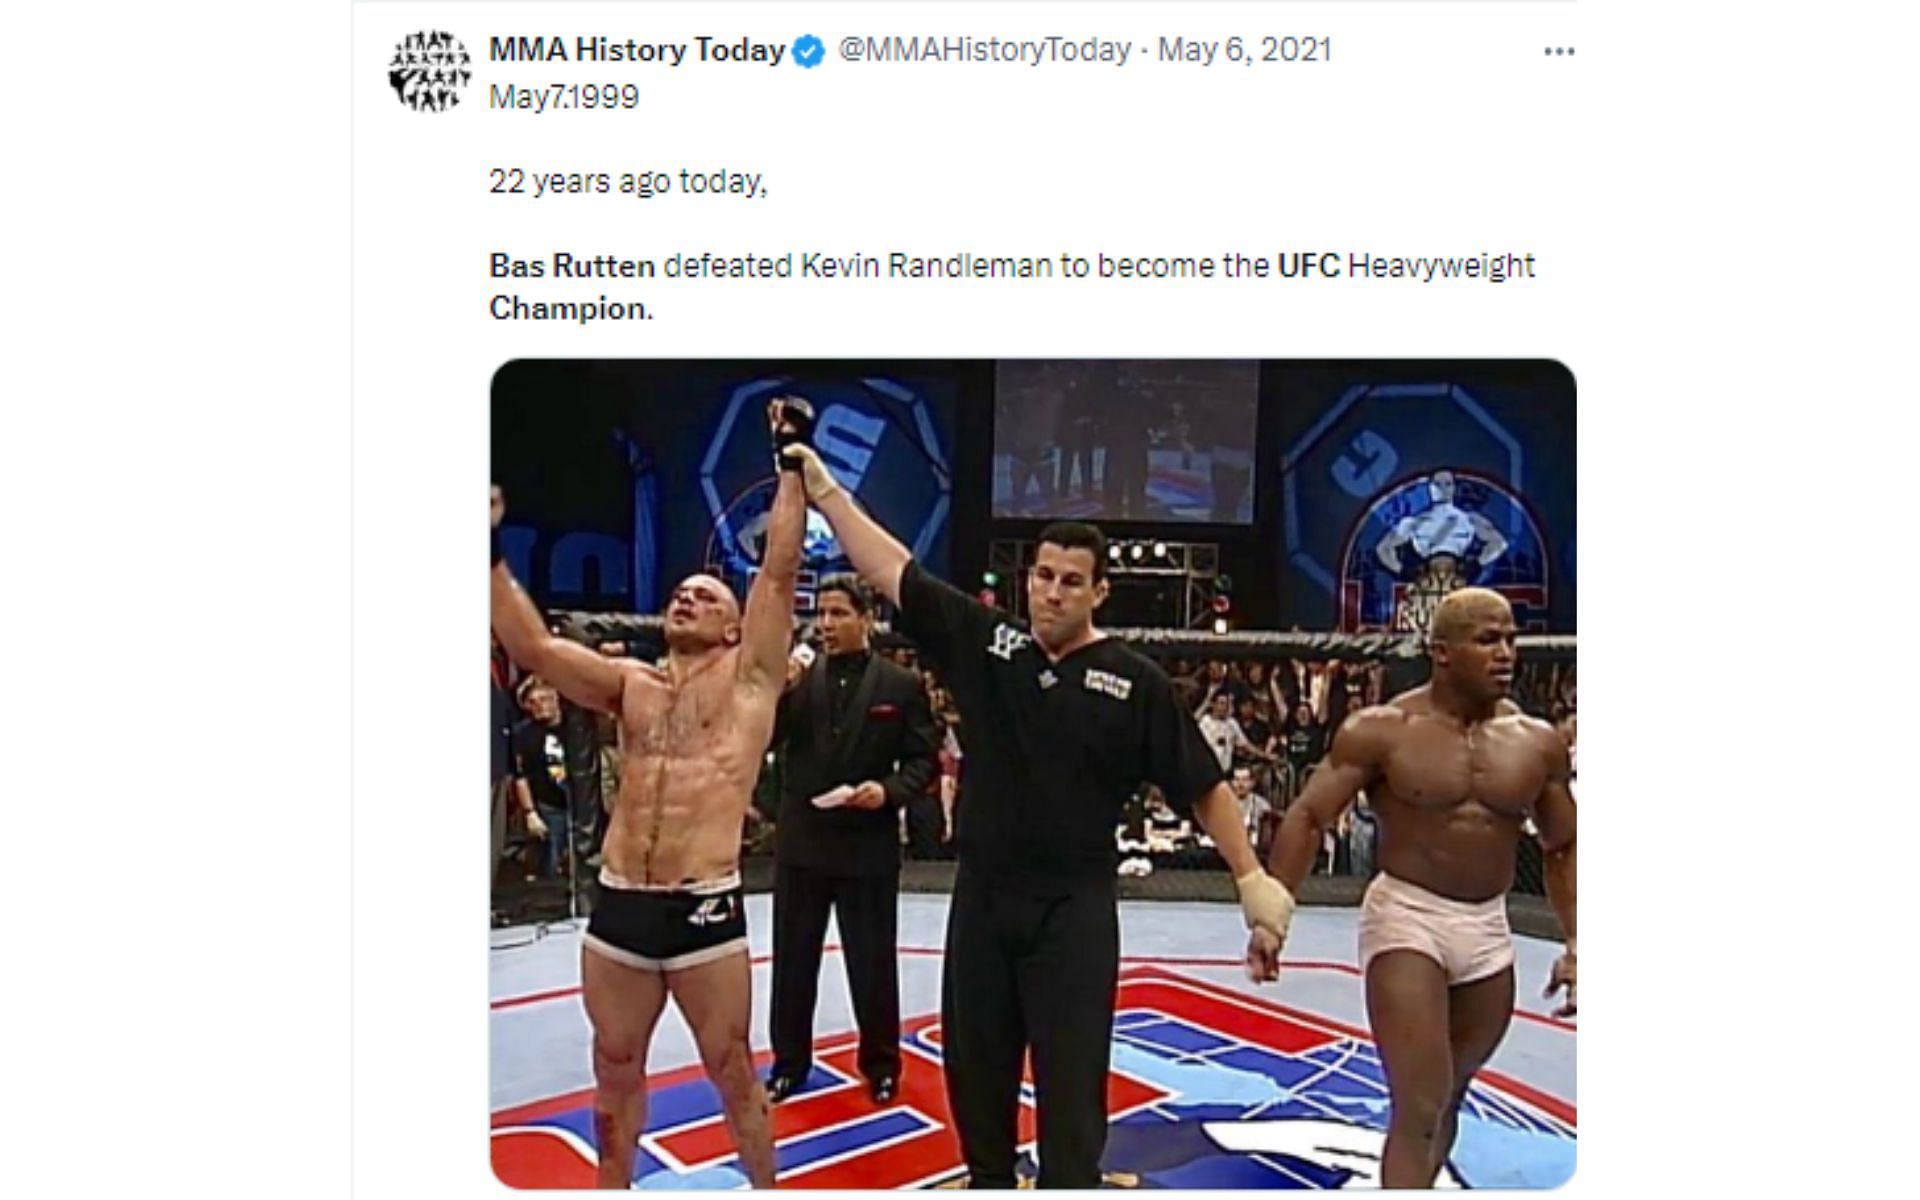 Tweet regarding Bas Rutten&#039;s UFC heavyweight championship win [Image courtesy: @MMAHistoryToday - X]